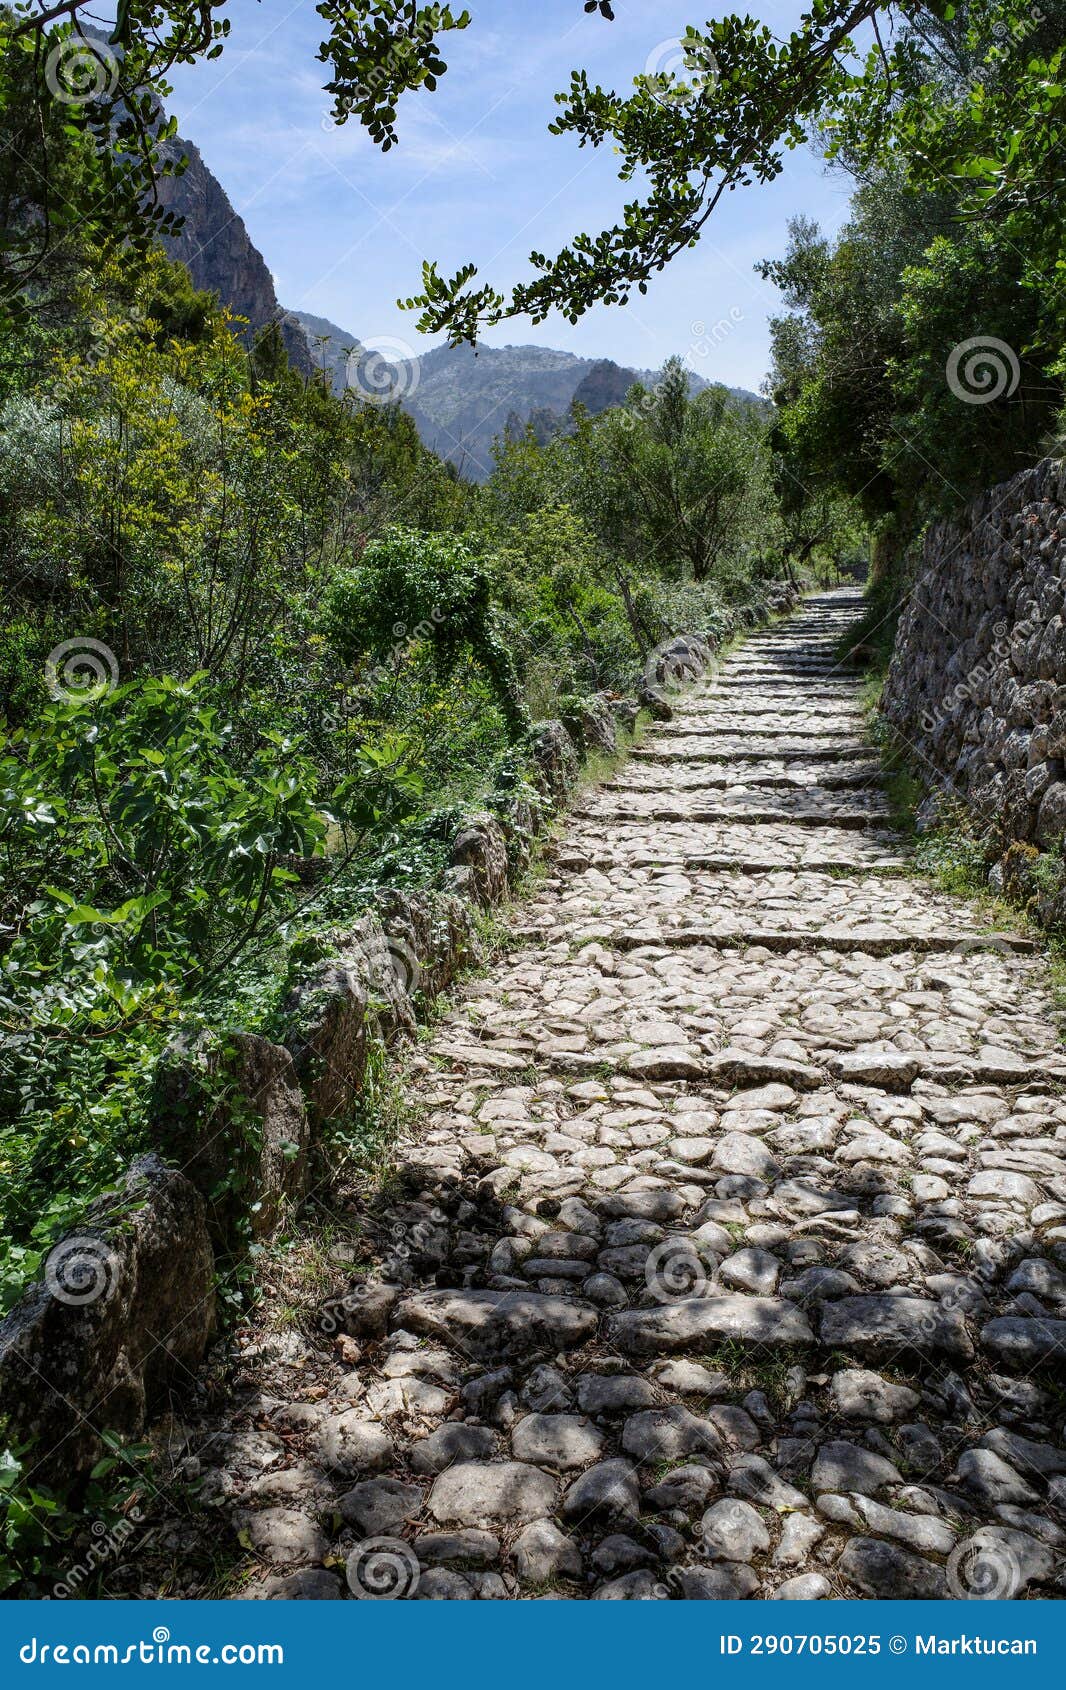 mallorca, spain - 12 june, 2023: the barranc de biniaraix and gr221 hiking trails in the tramuntana mountains, mallorca